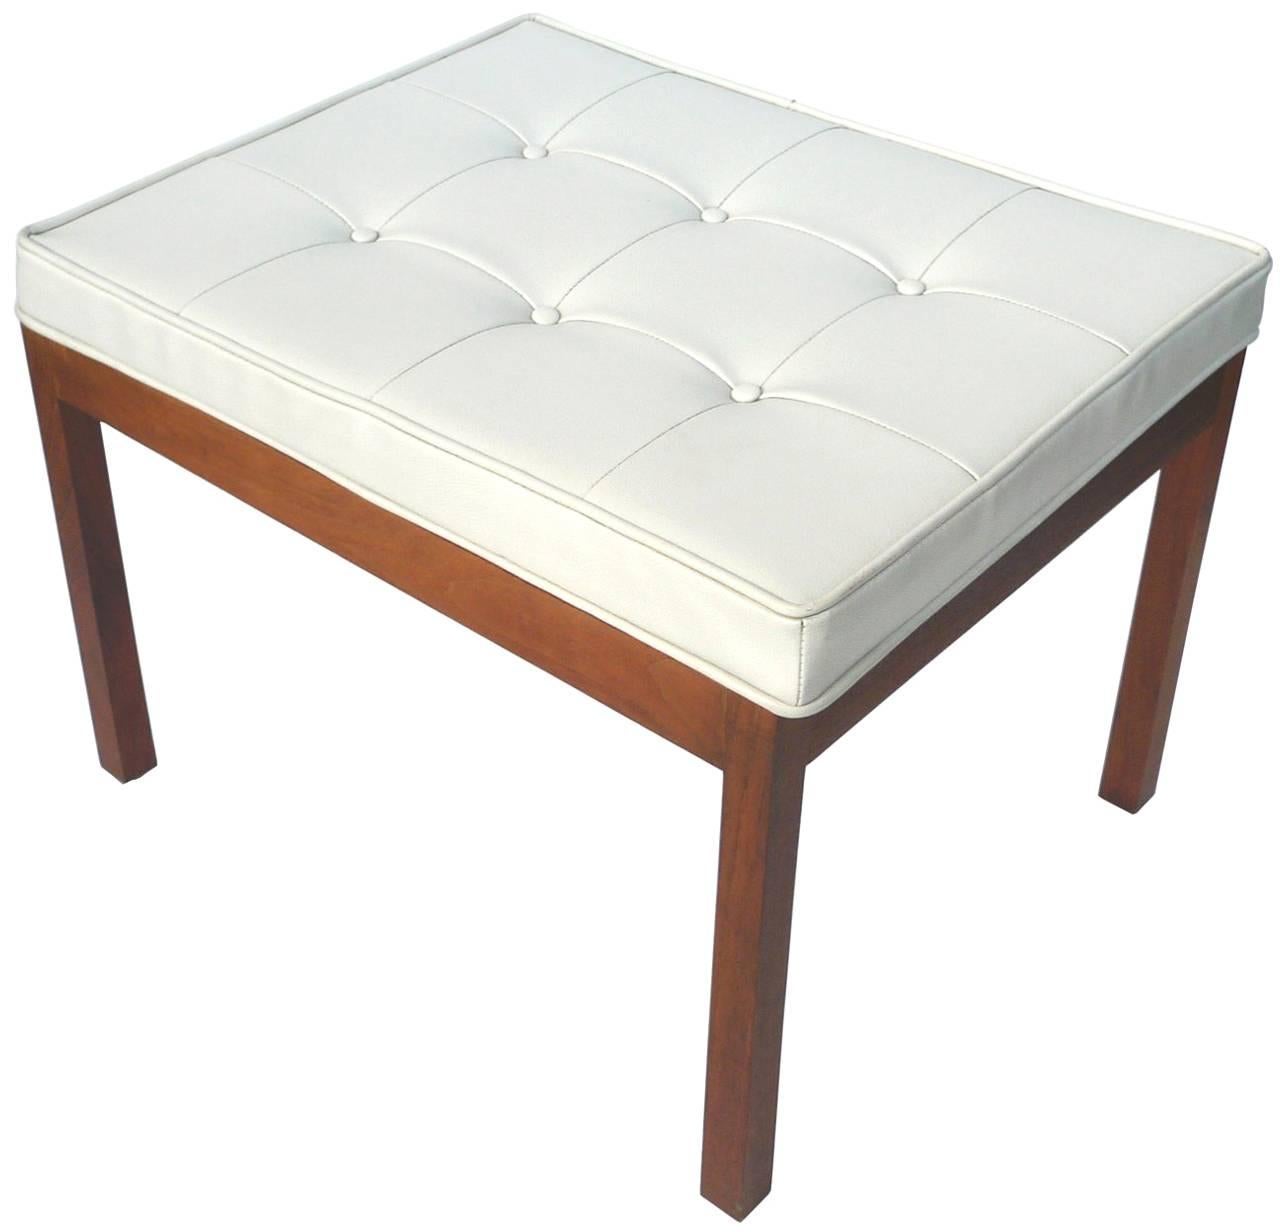 1960s White Vinyl Tufted Bench by Hibriten Chair Co